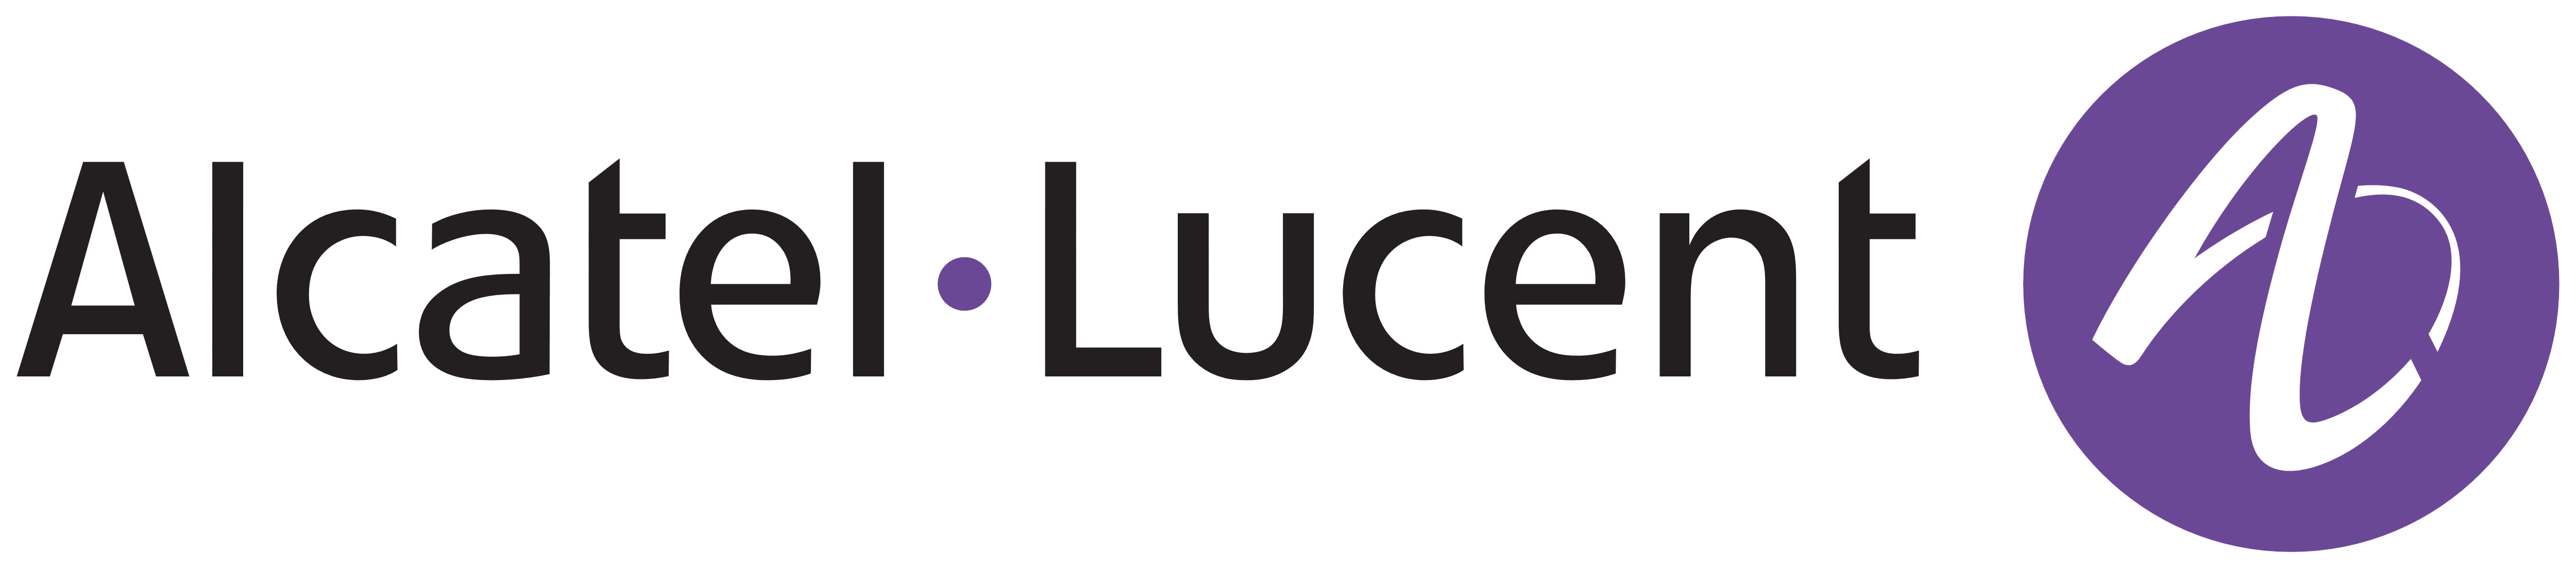 Alcatel-Lucent Logo - Alcatel-Lucent – Logos Download